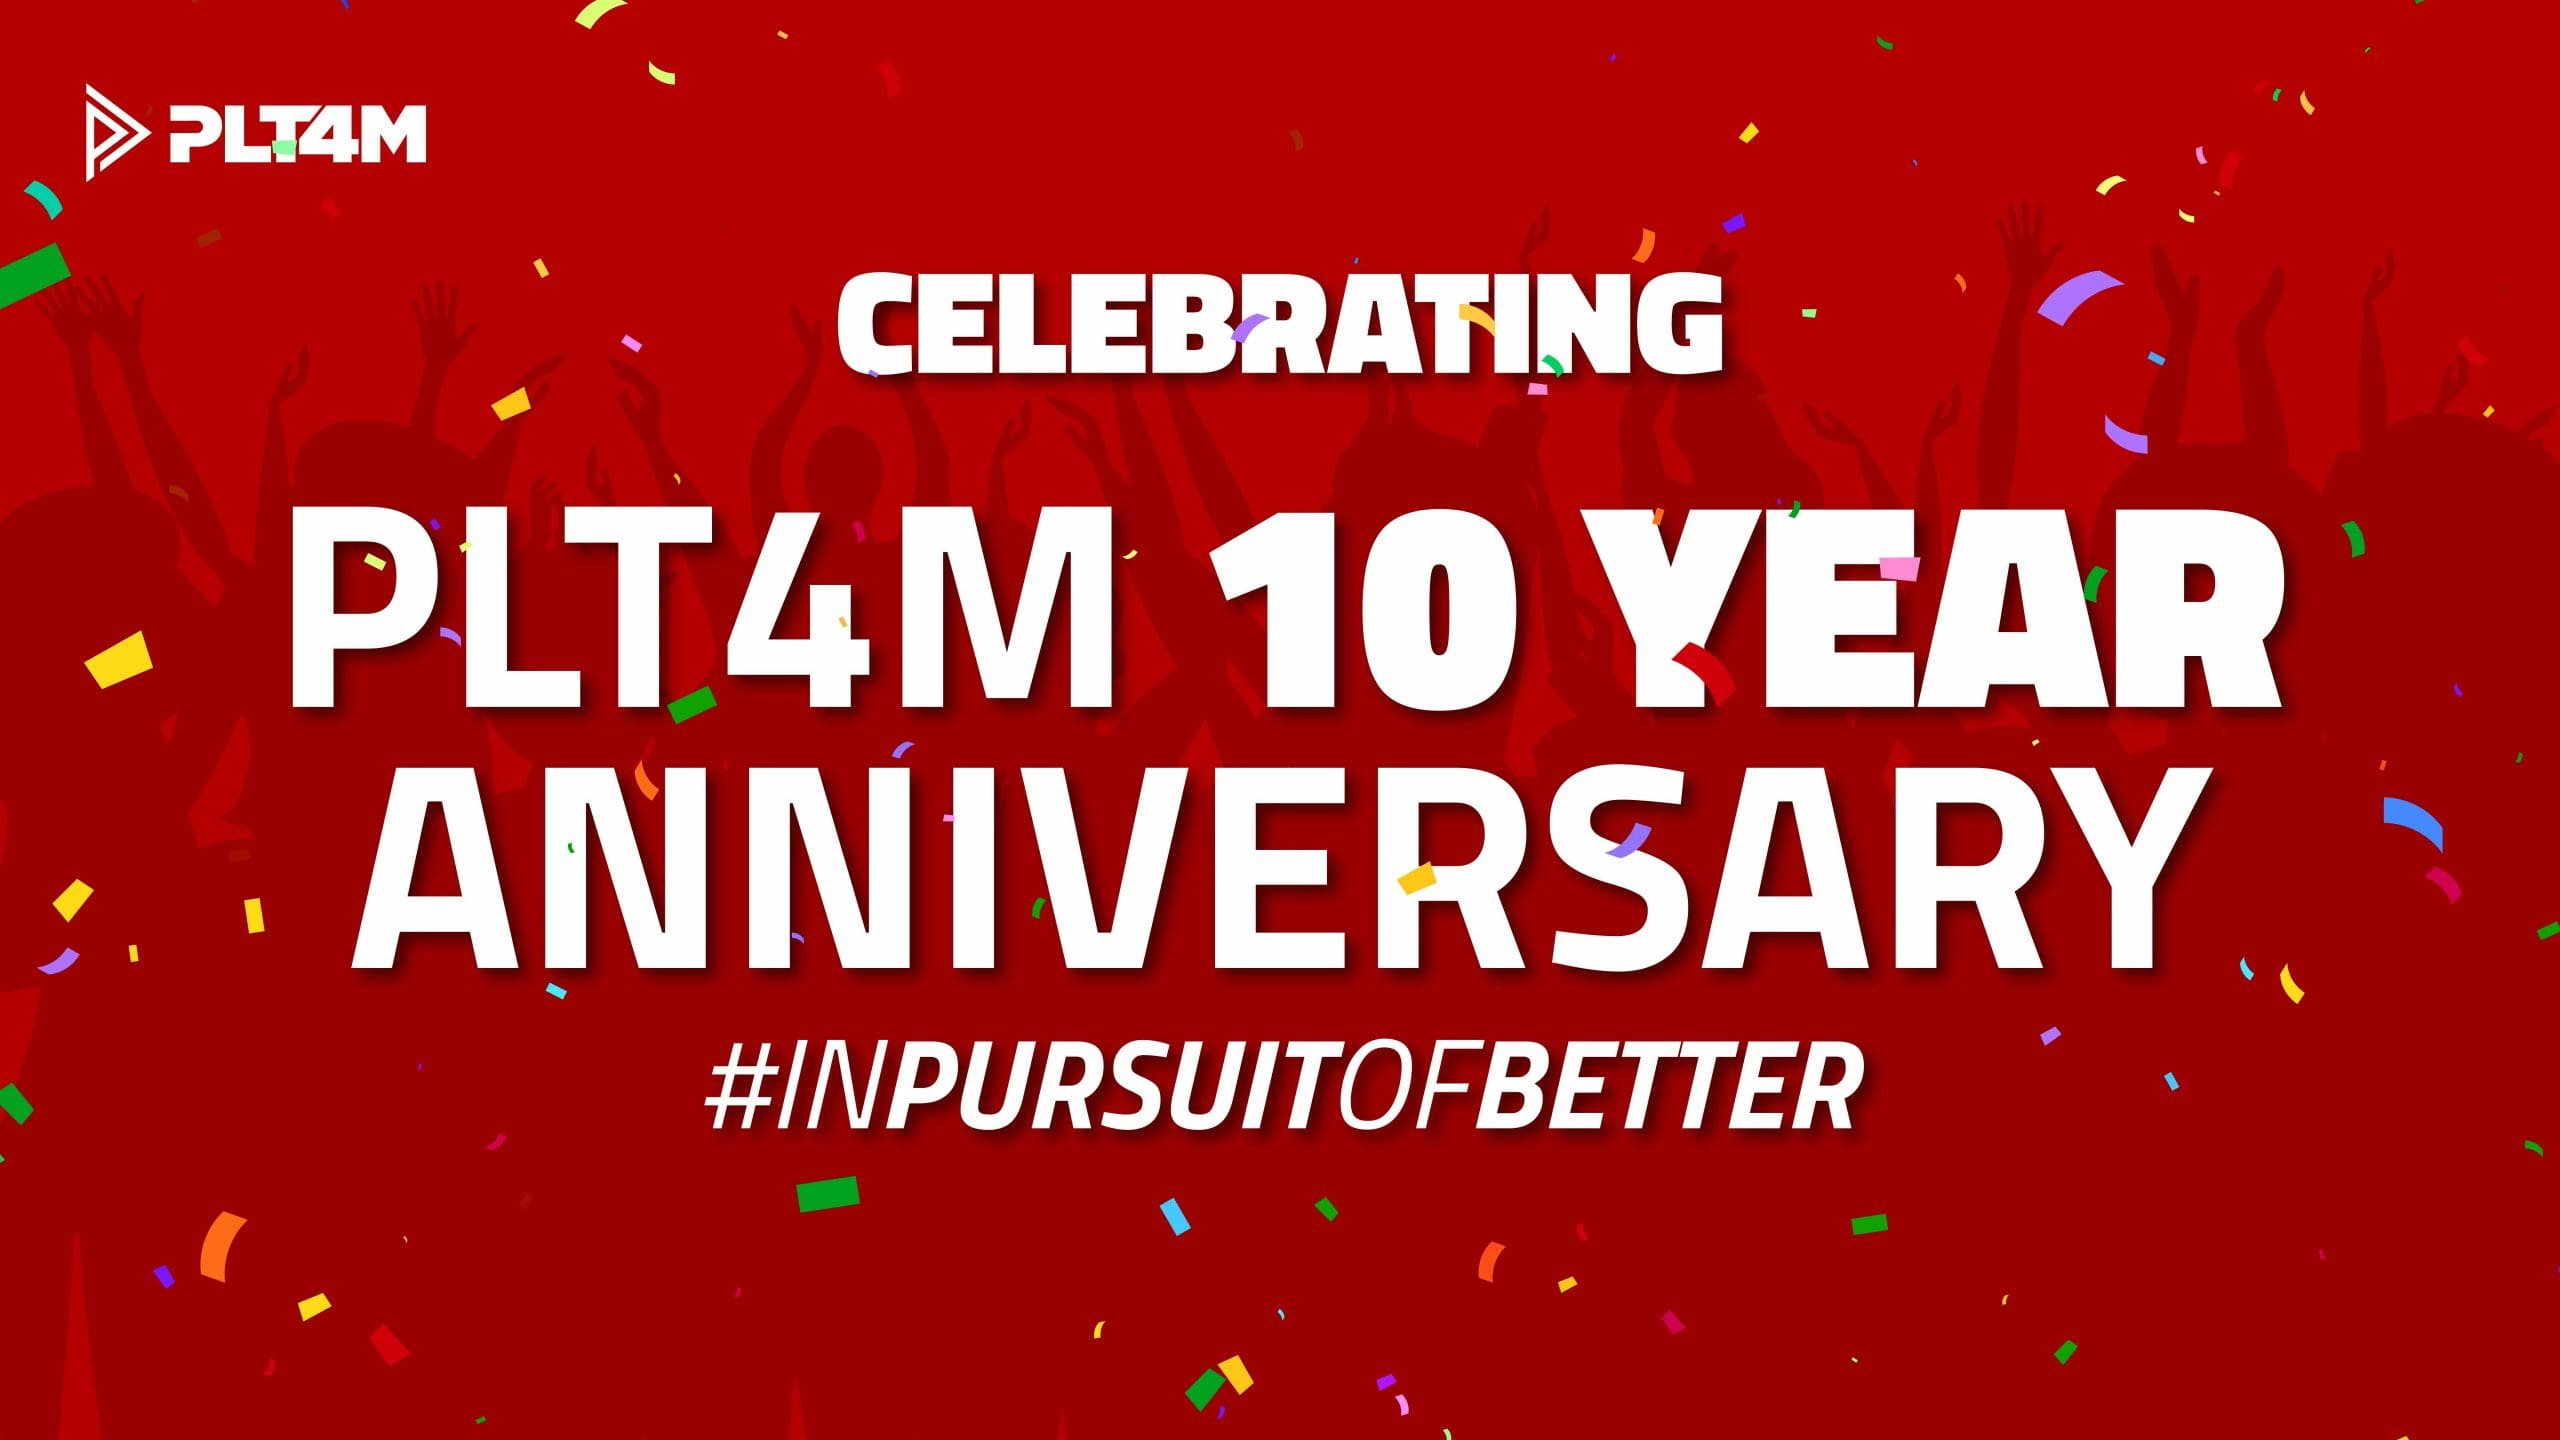 PLT4M sign celebrating 10 year anniversary.